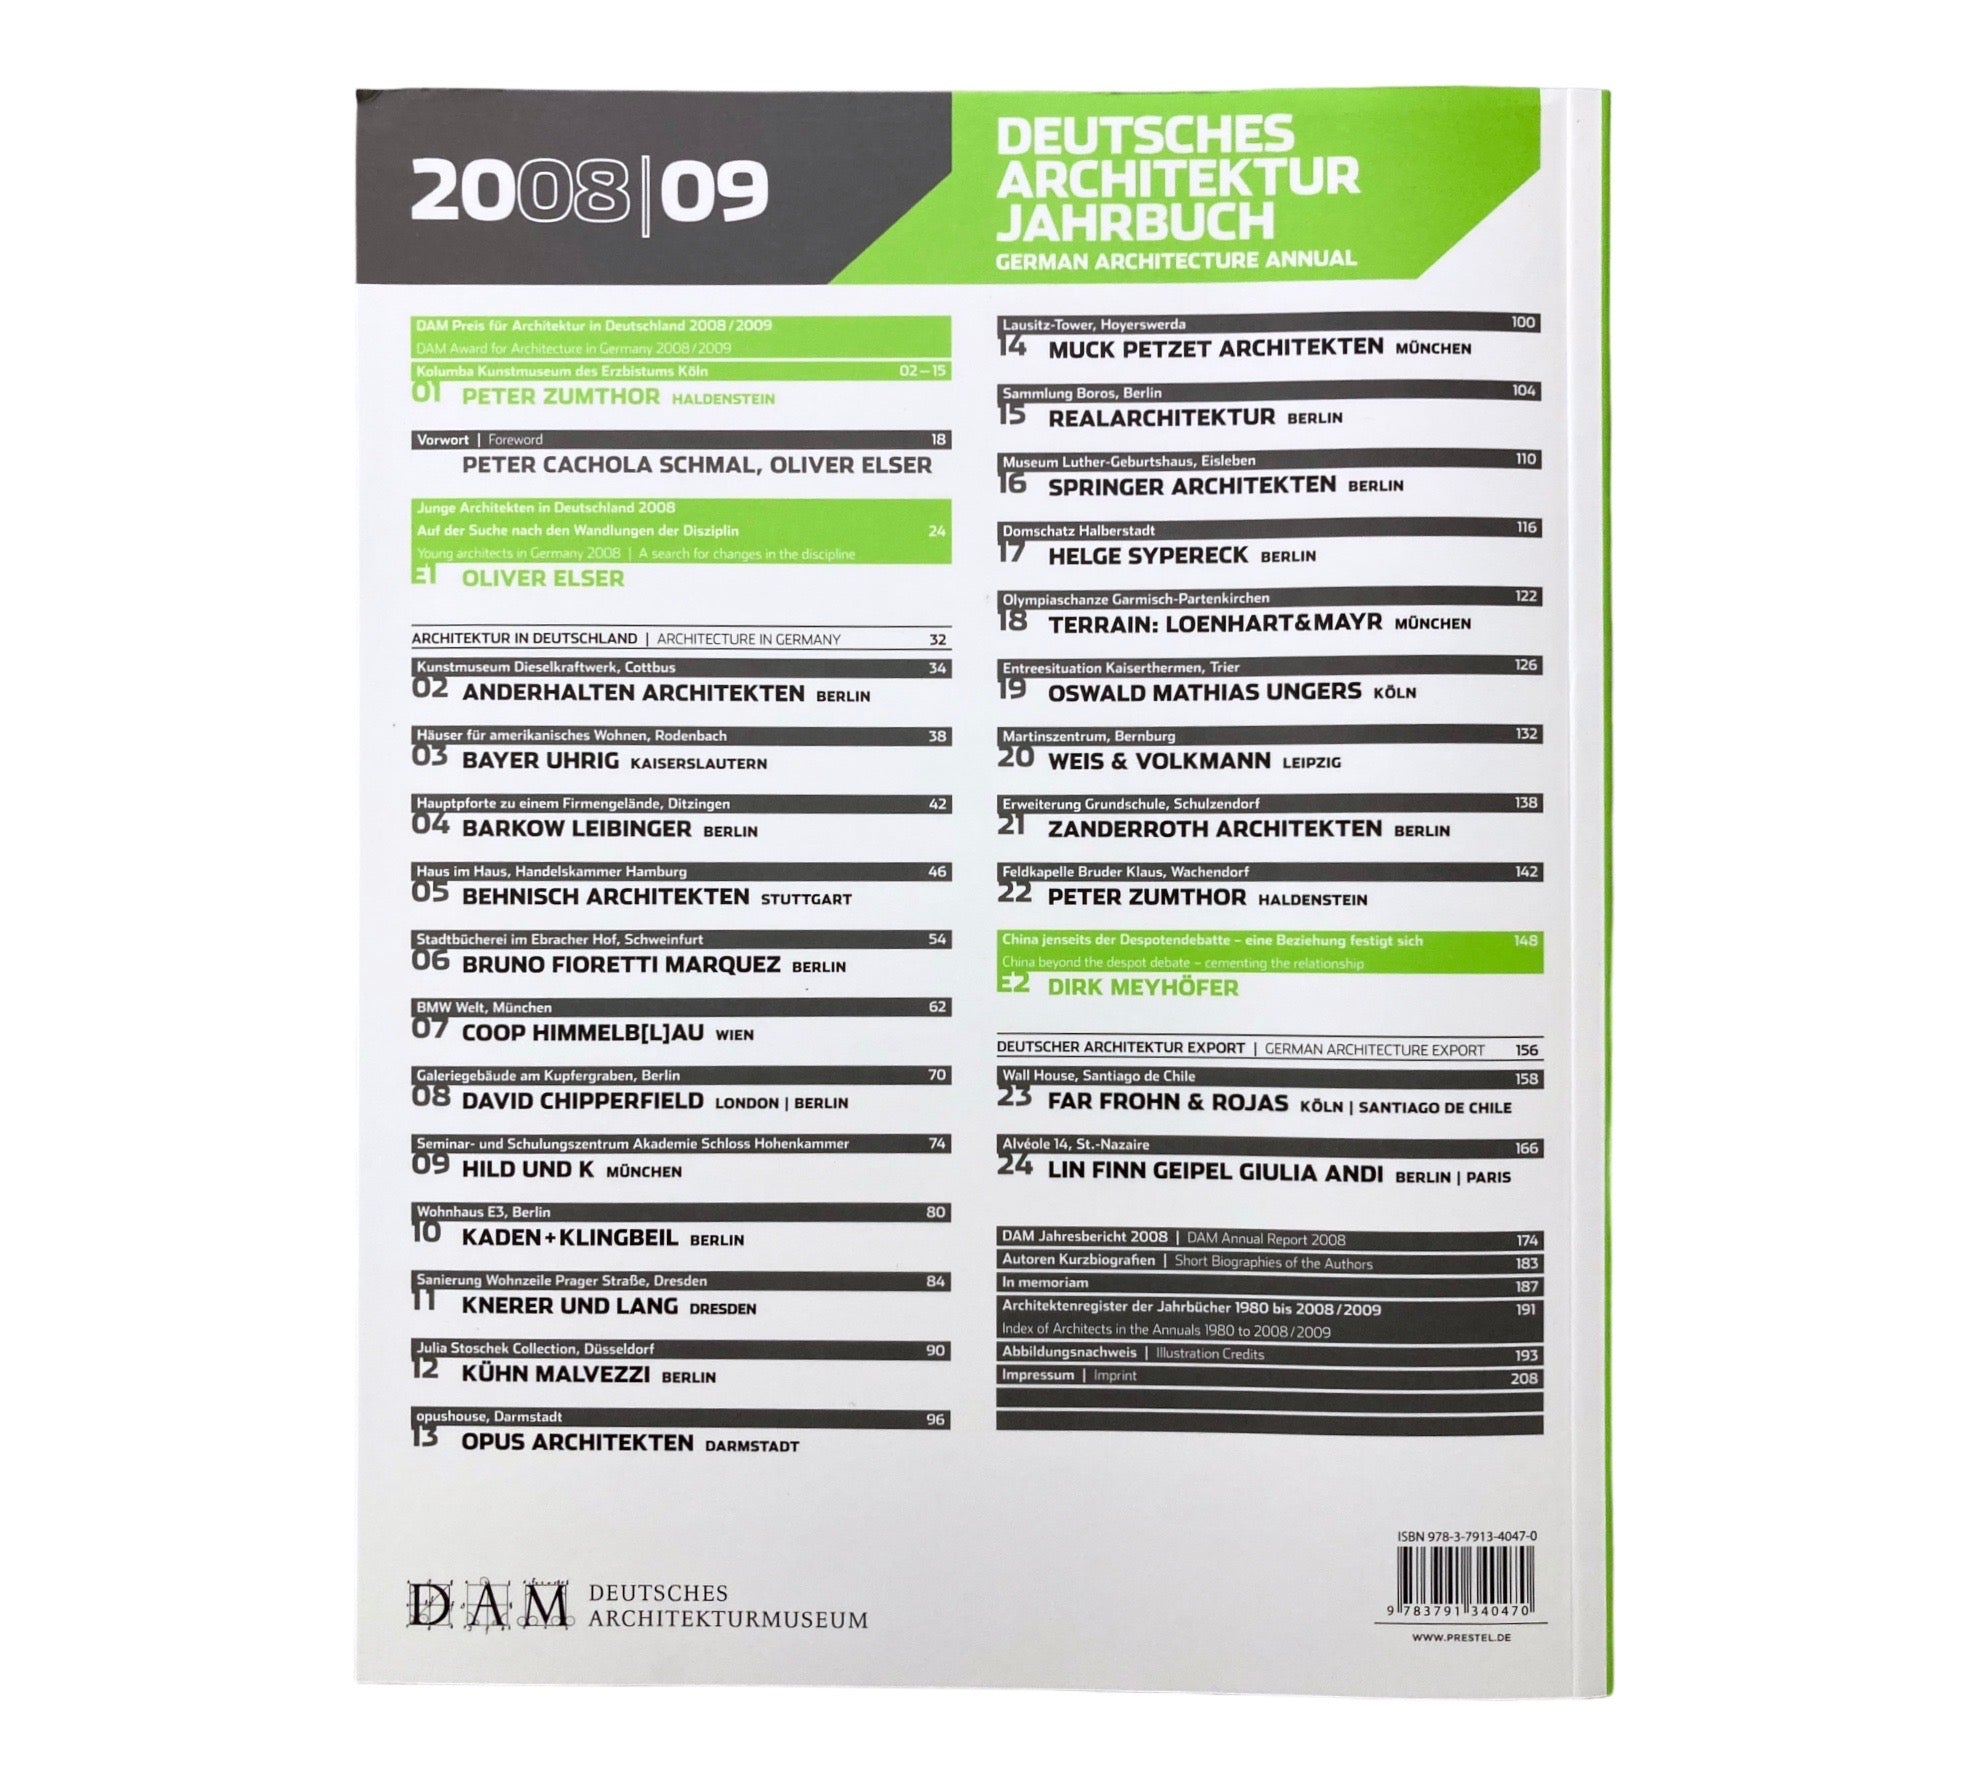 DAM German Architecture Annual: 2008/09